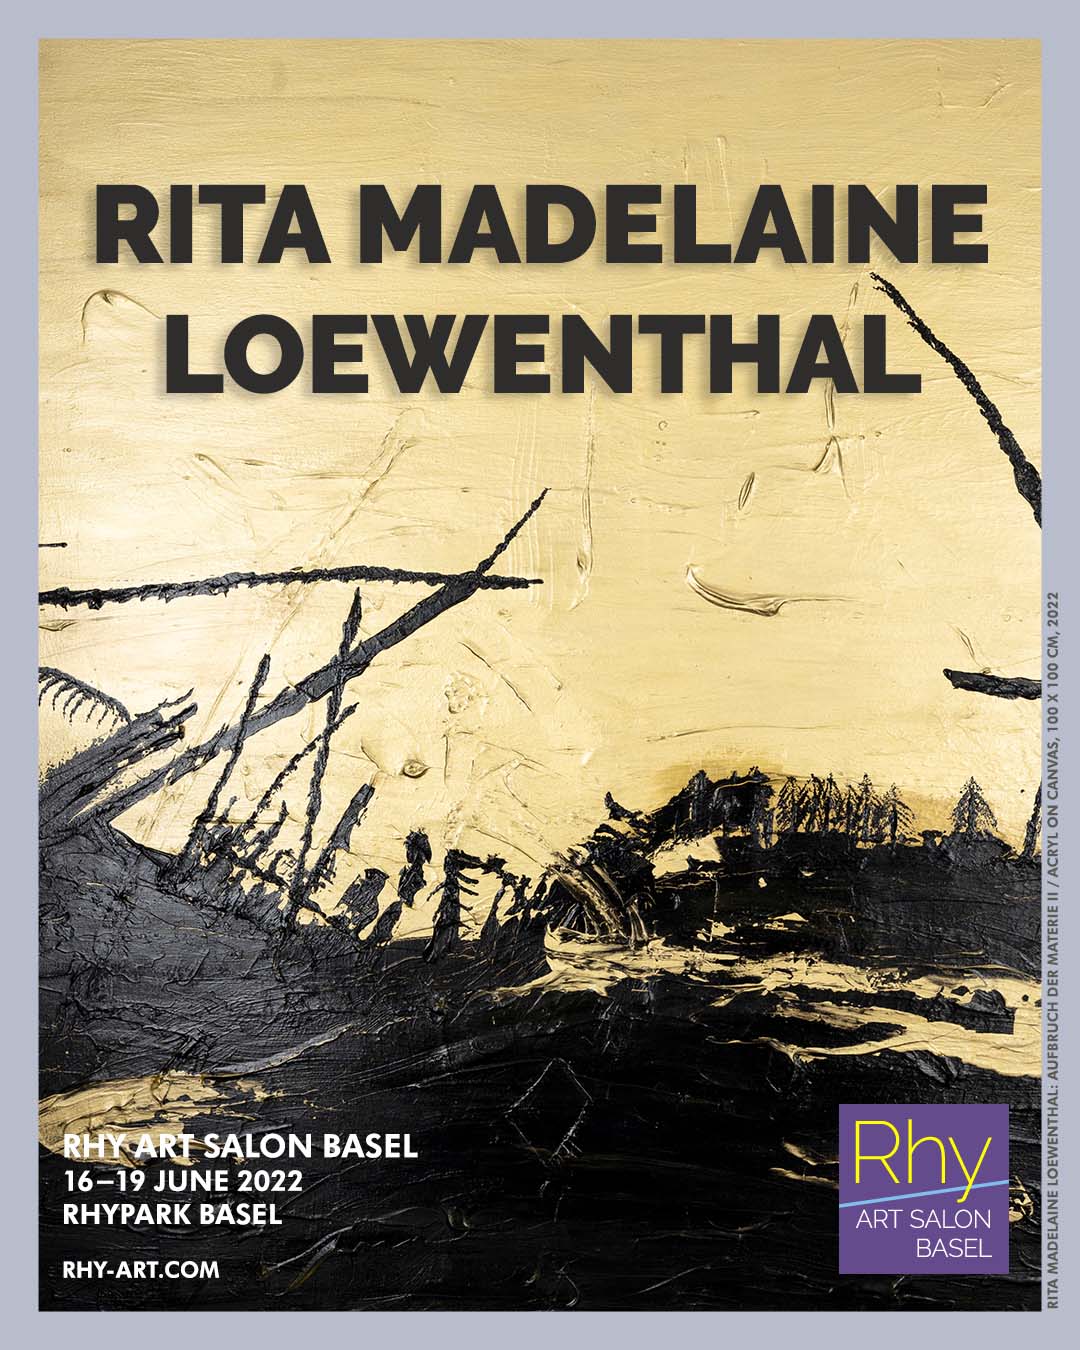 Rita Madelaine Loewenthal at Rhy Art Salon Basel 2022